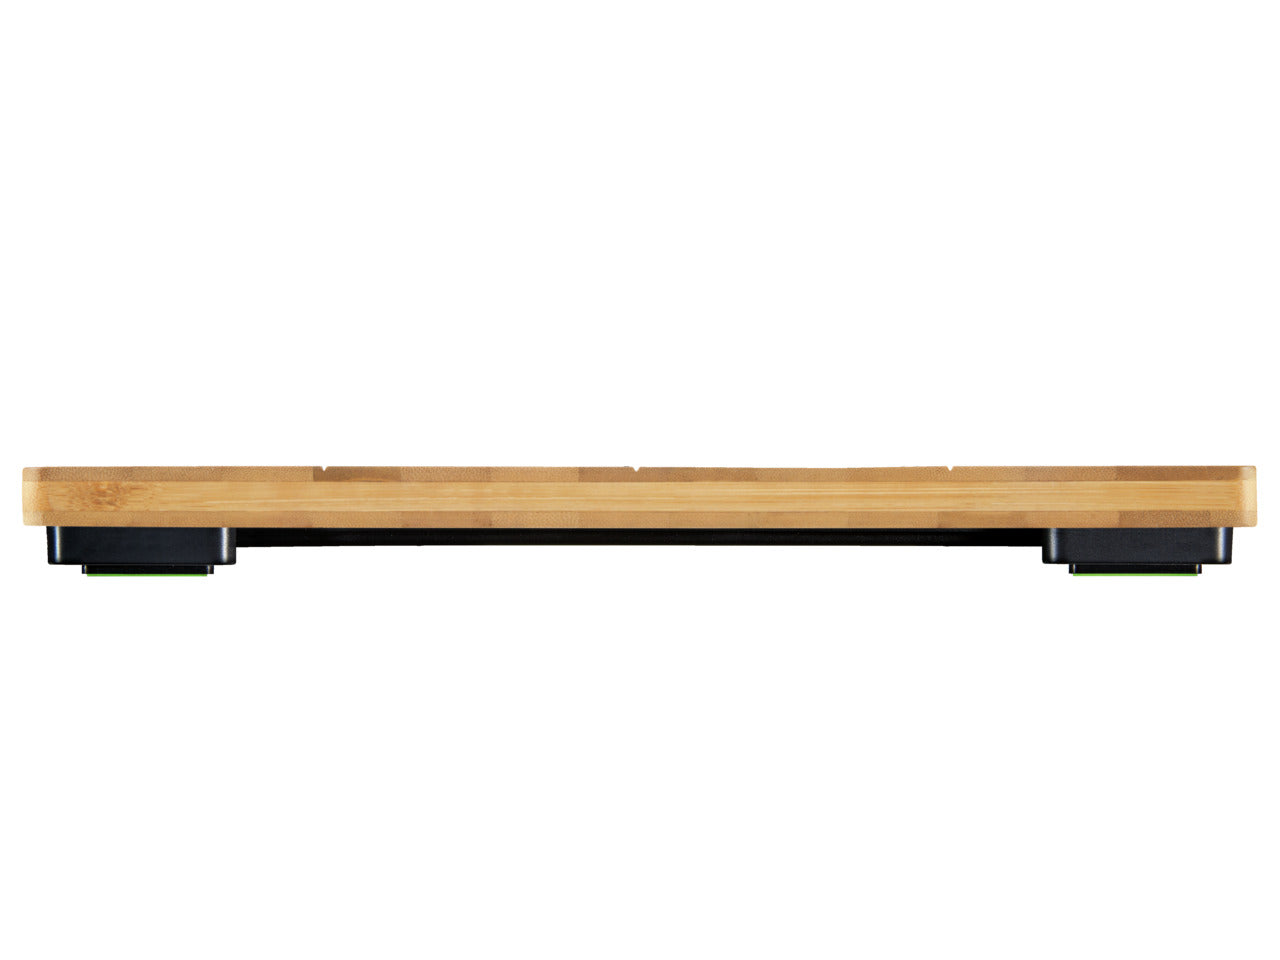 Soehnle Style Sense Bamboo Magic Bathroom Scale 180kg Capacity S63880